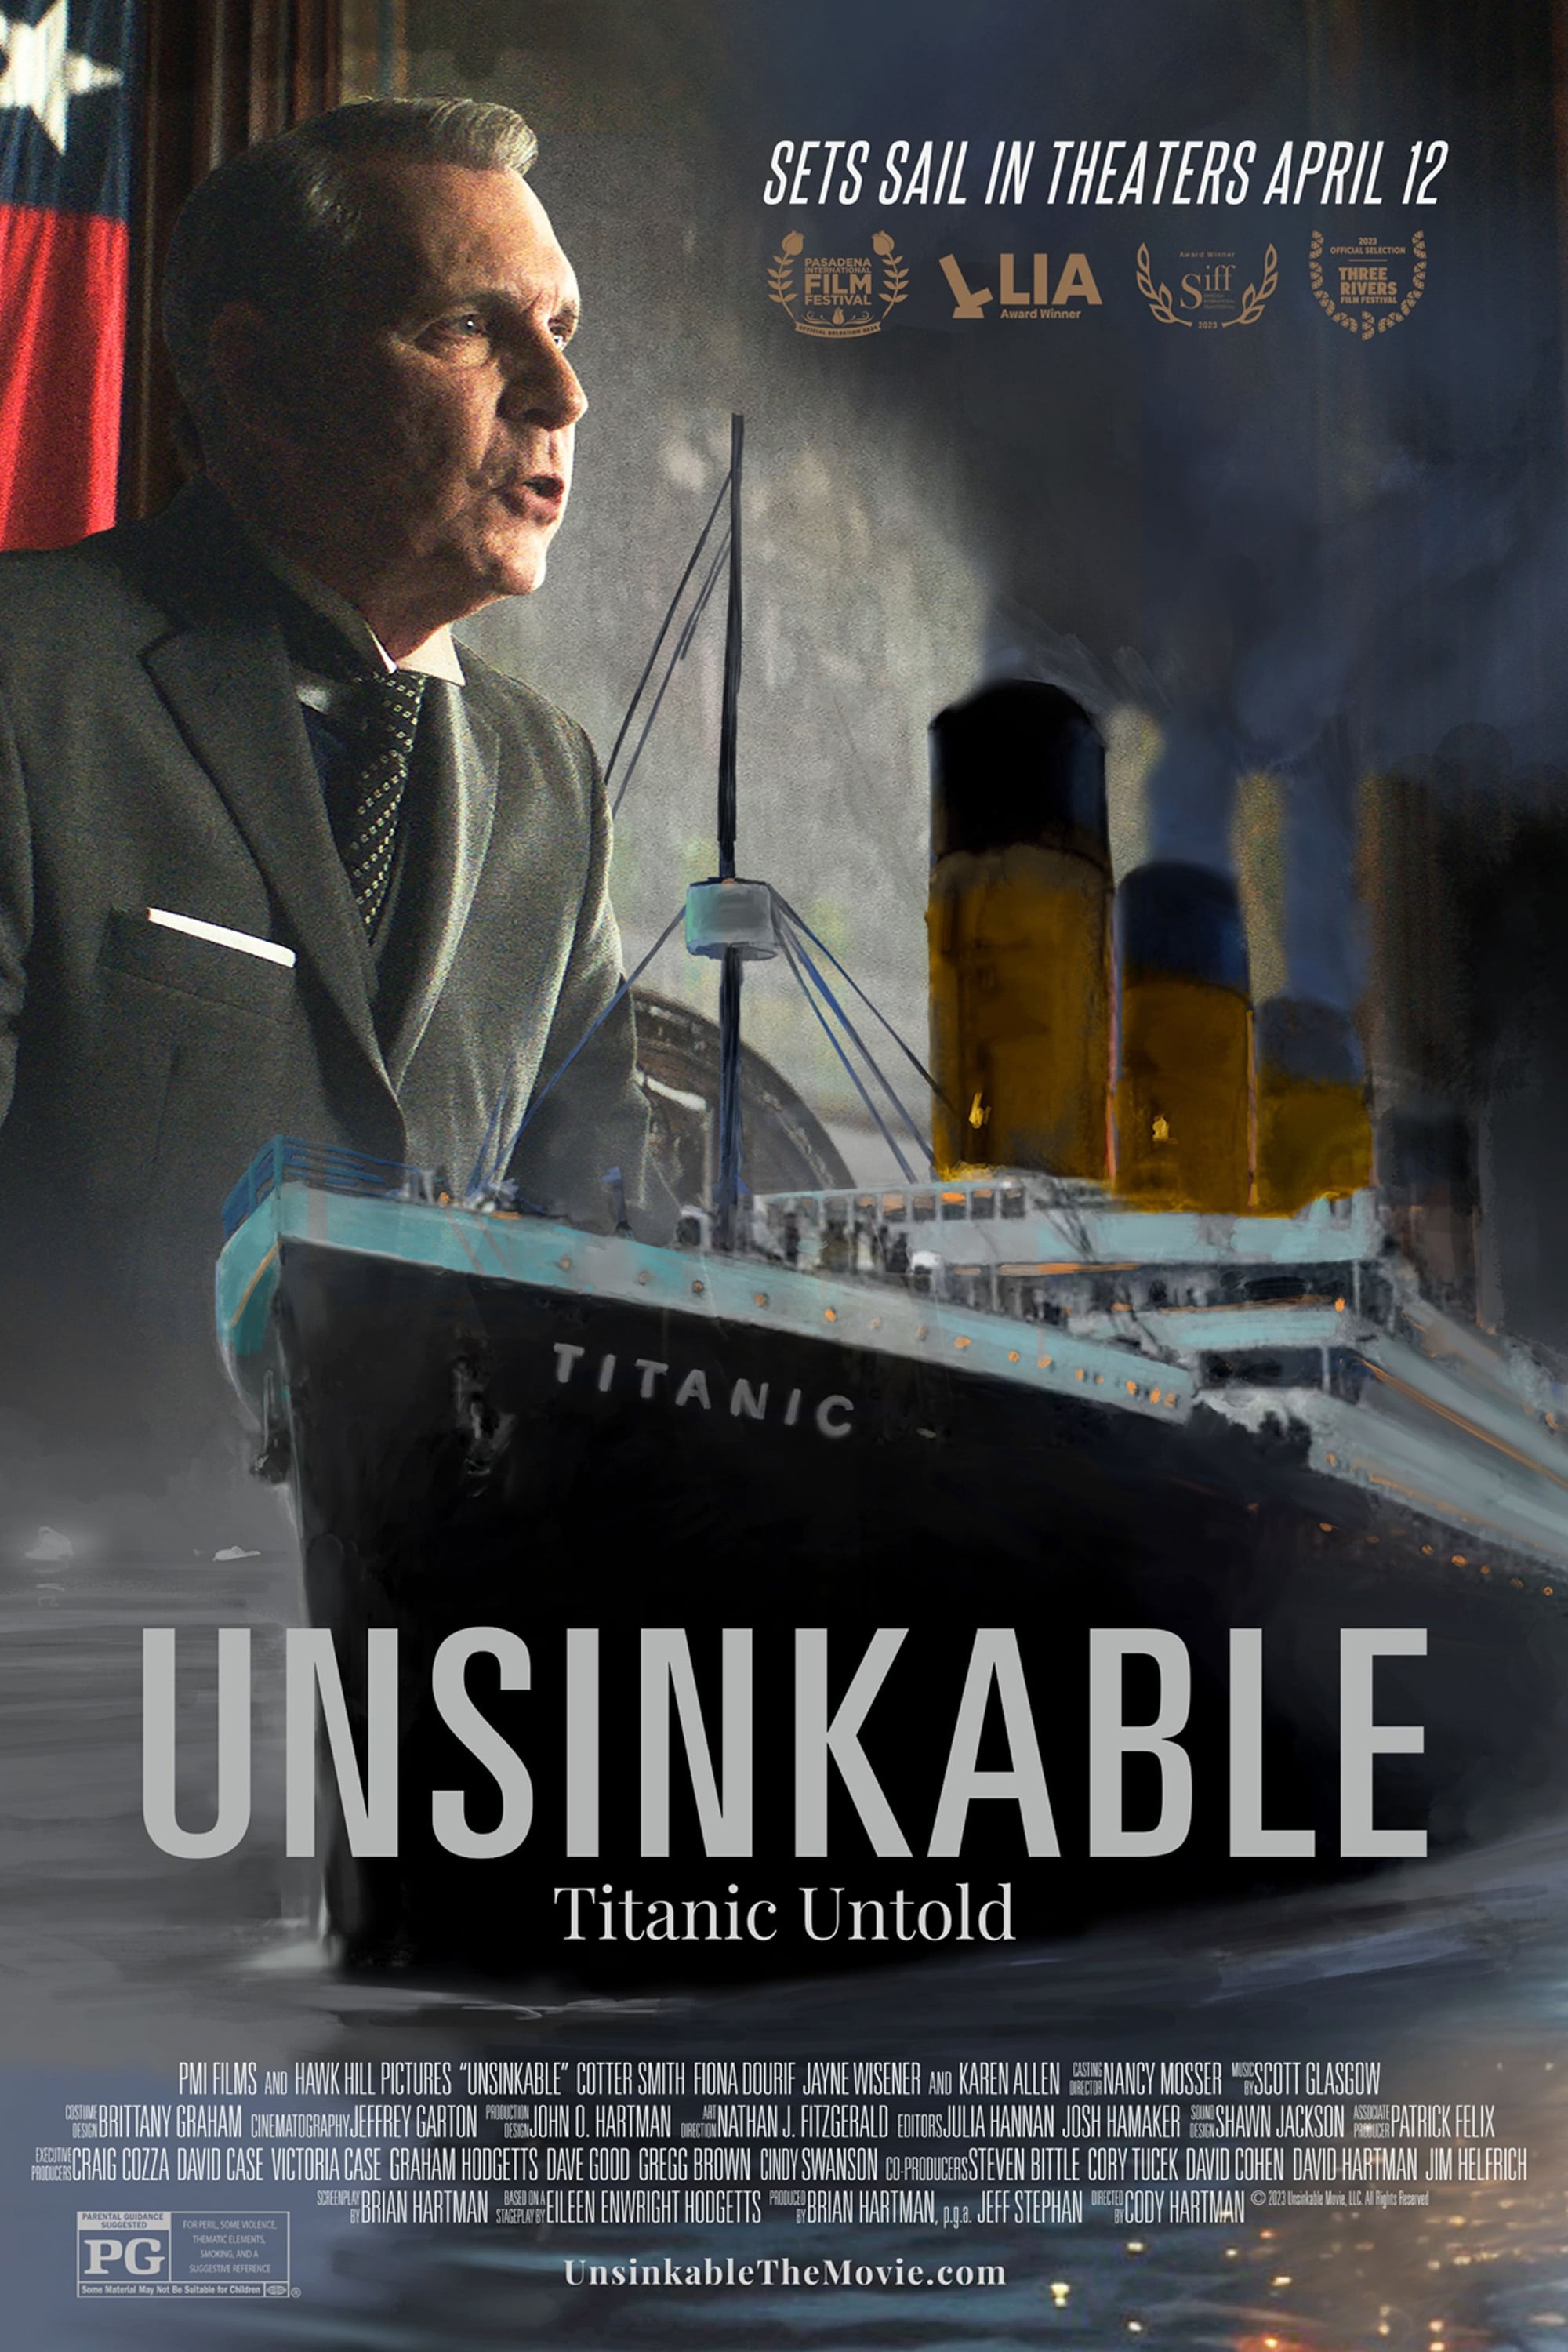 Unsinkable: Titanic Untold